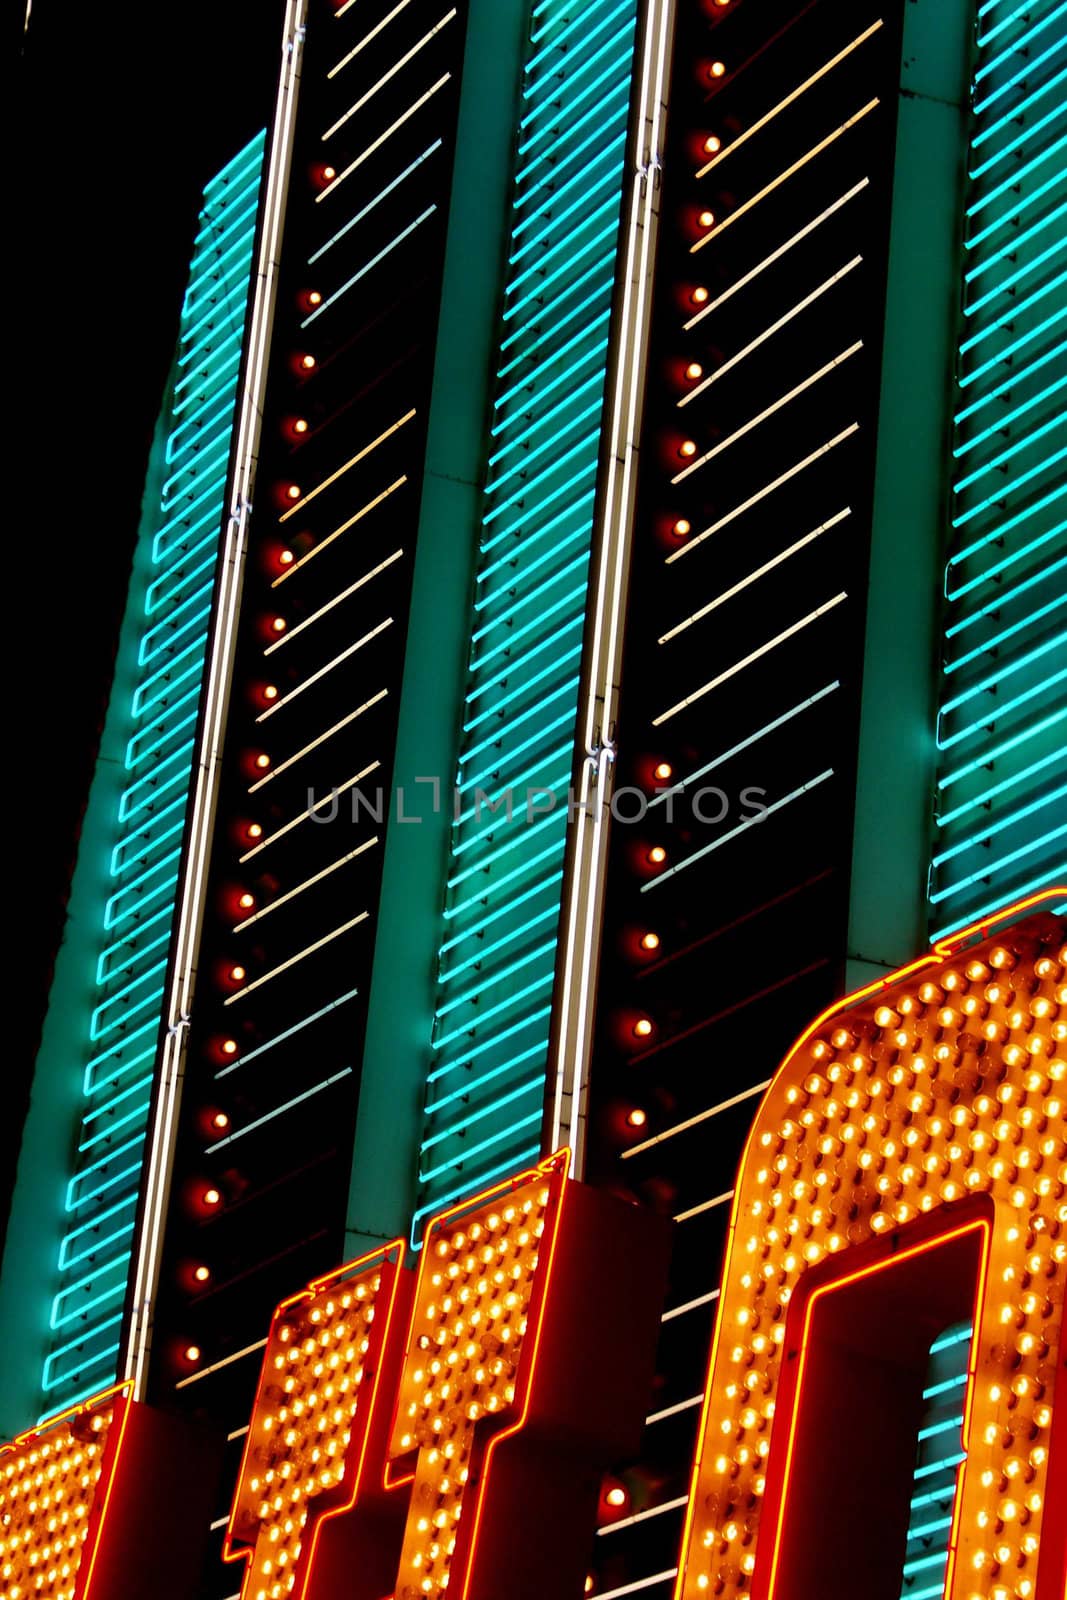 Old Las Vegas neon sign